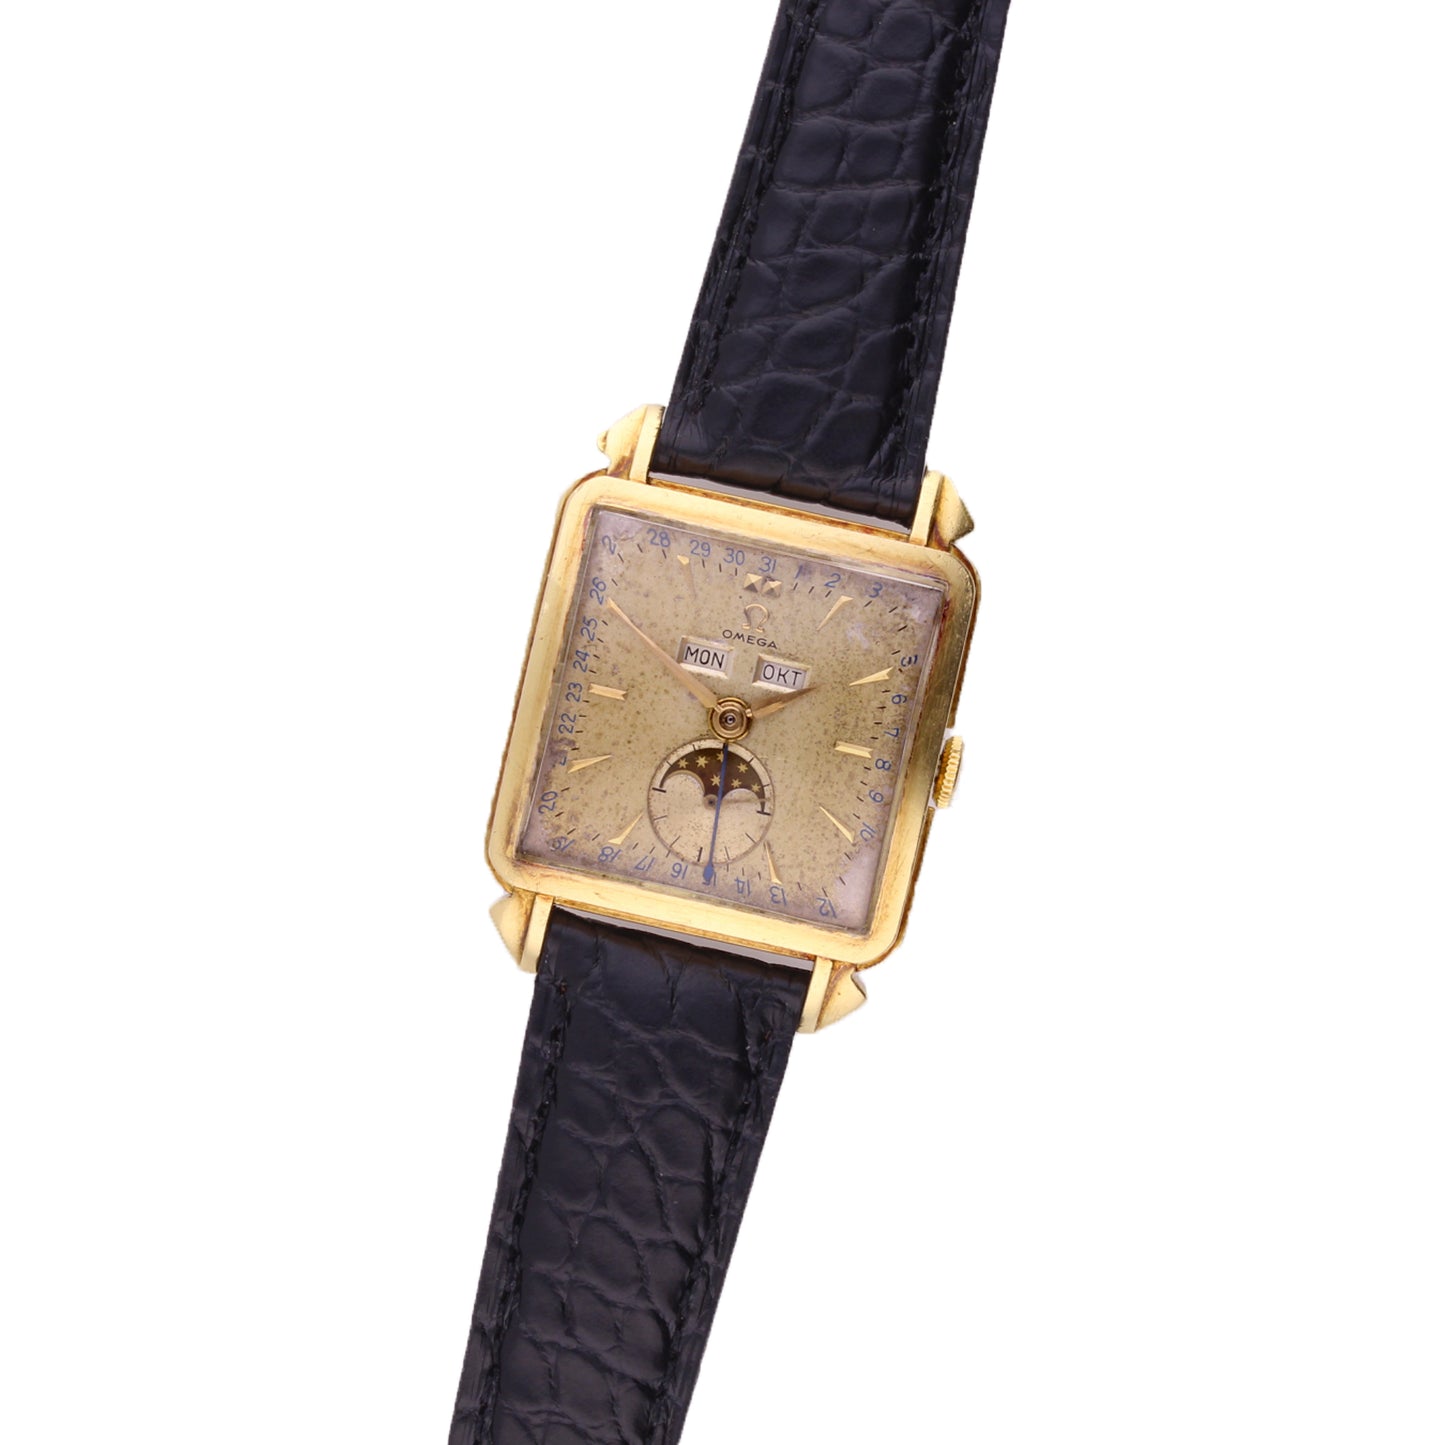 18ct yellow gold OMEGA Cosmic Triple Date Calendar wristwatch. Made 1952